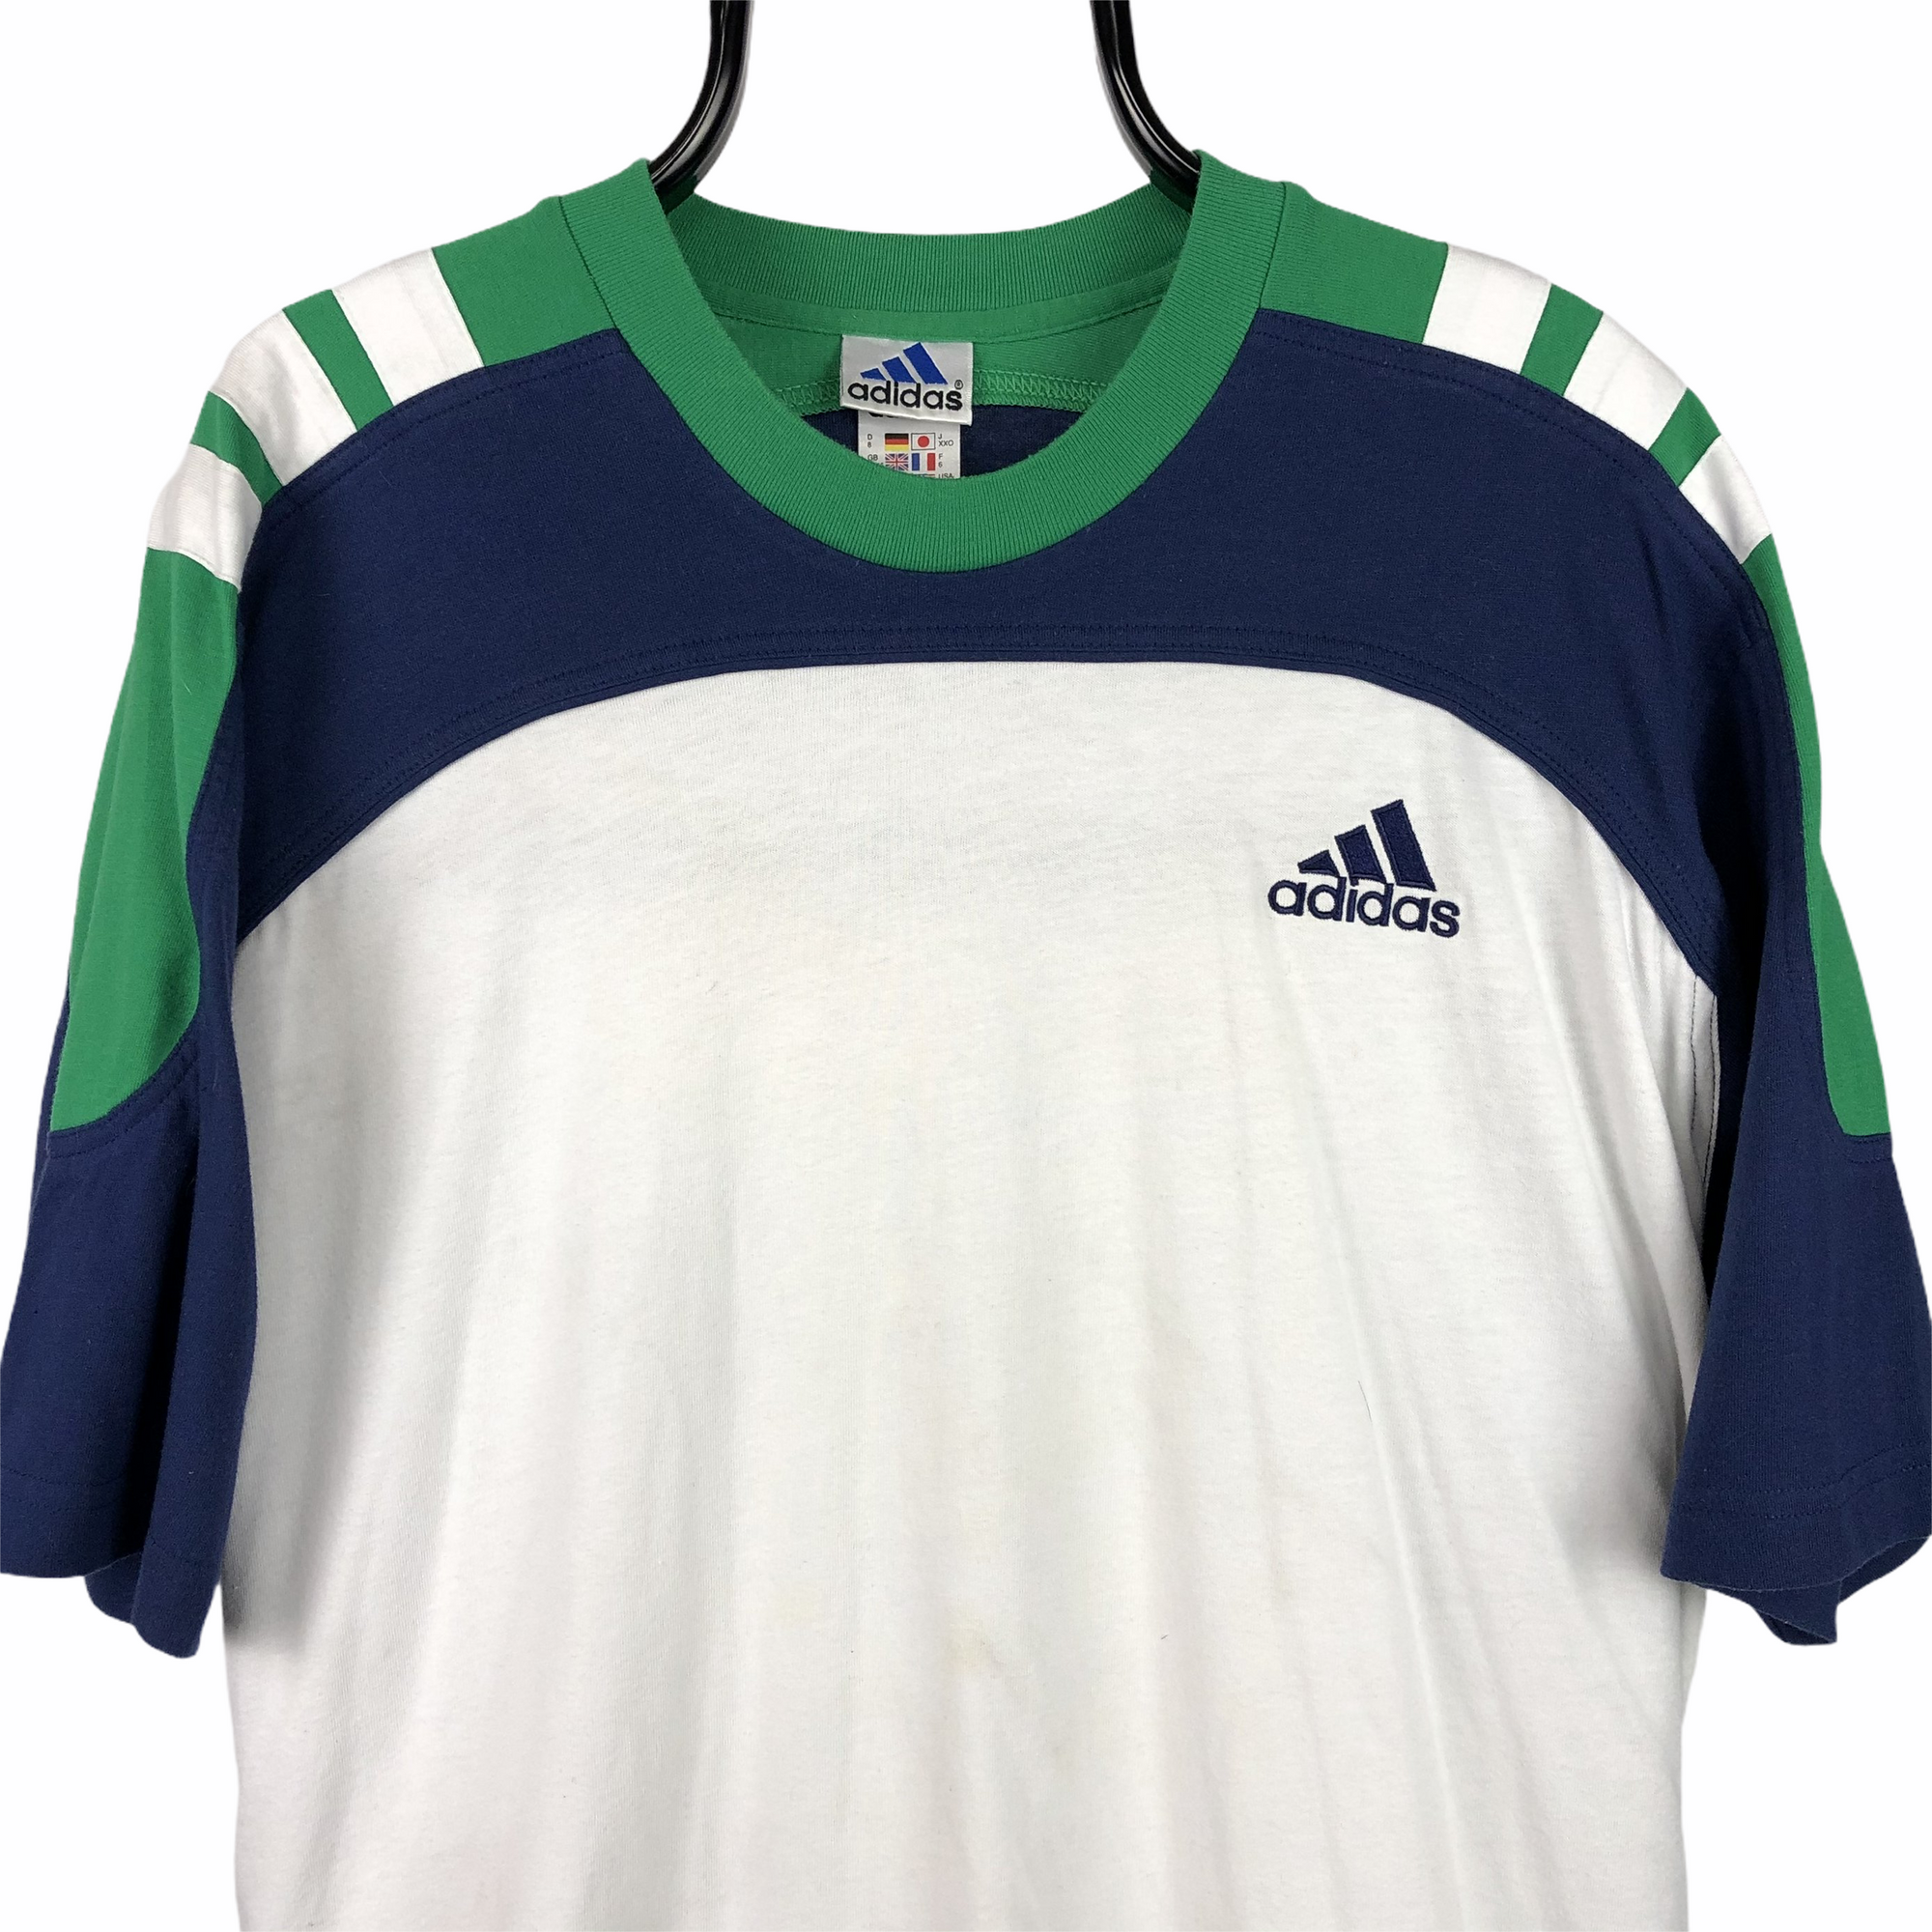 Vintage 90s Adidas Tee in White/Green/Navy - Men's Large/Women's XL